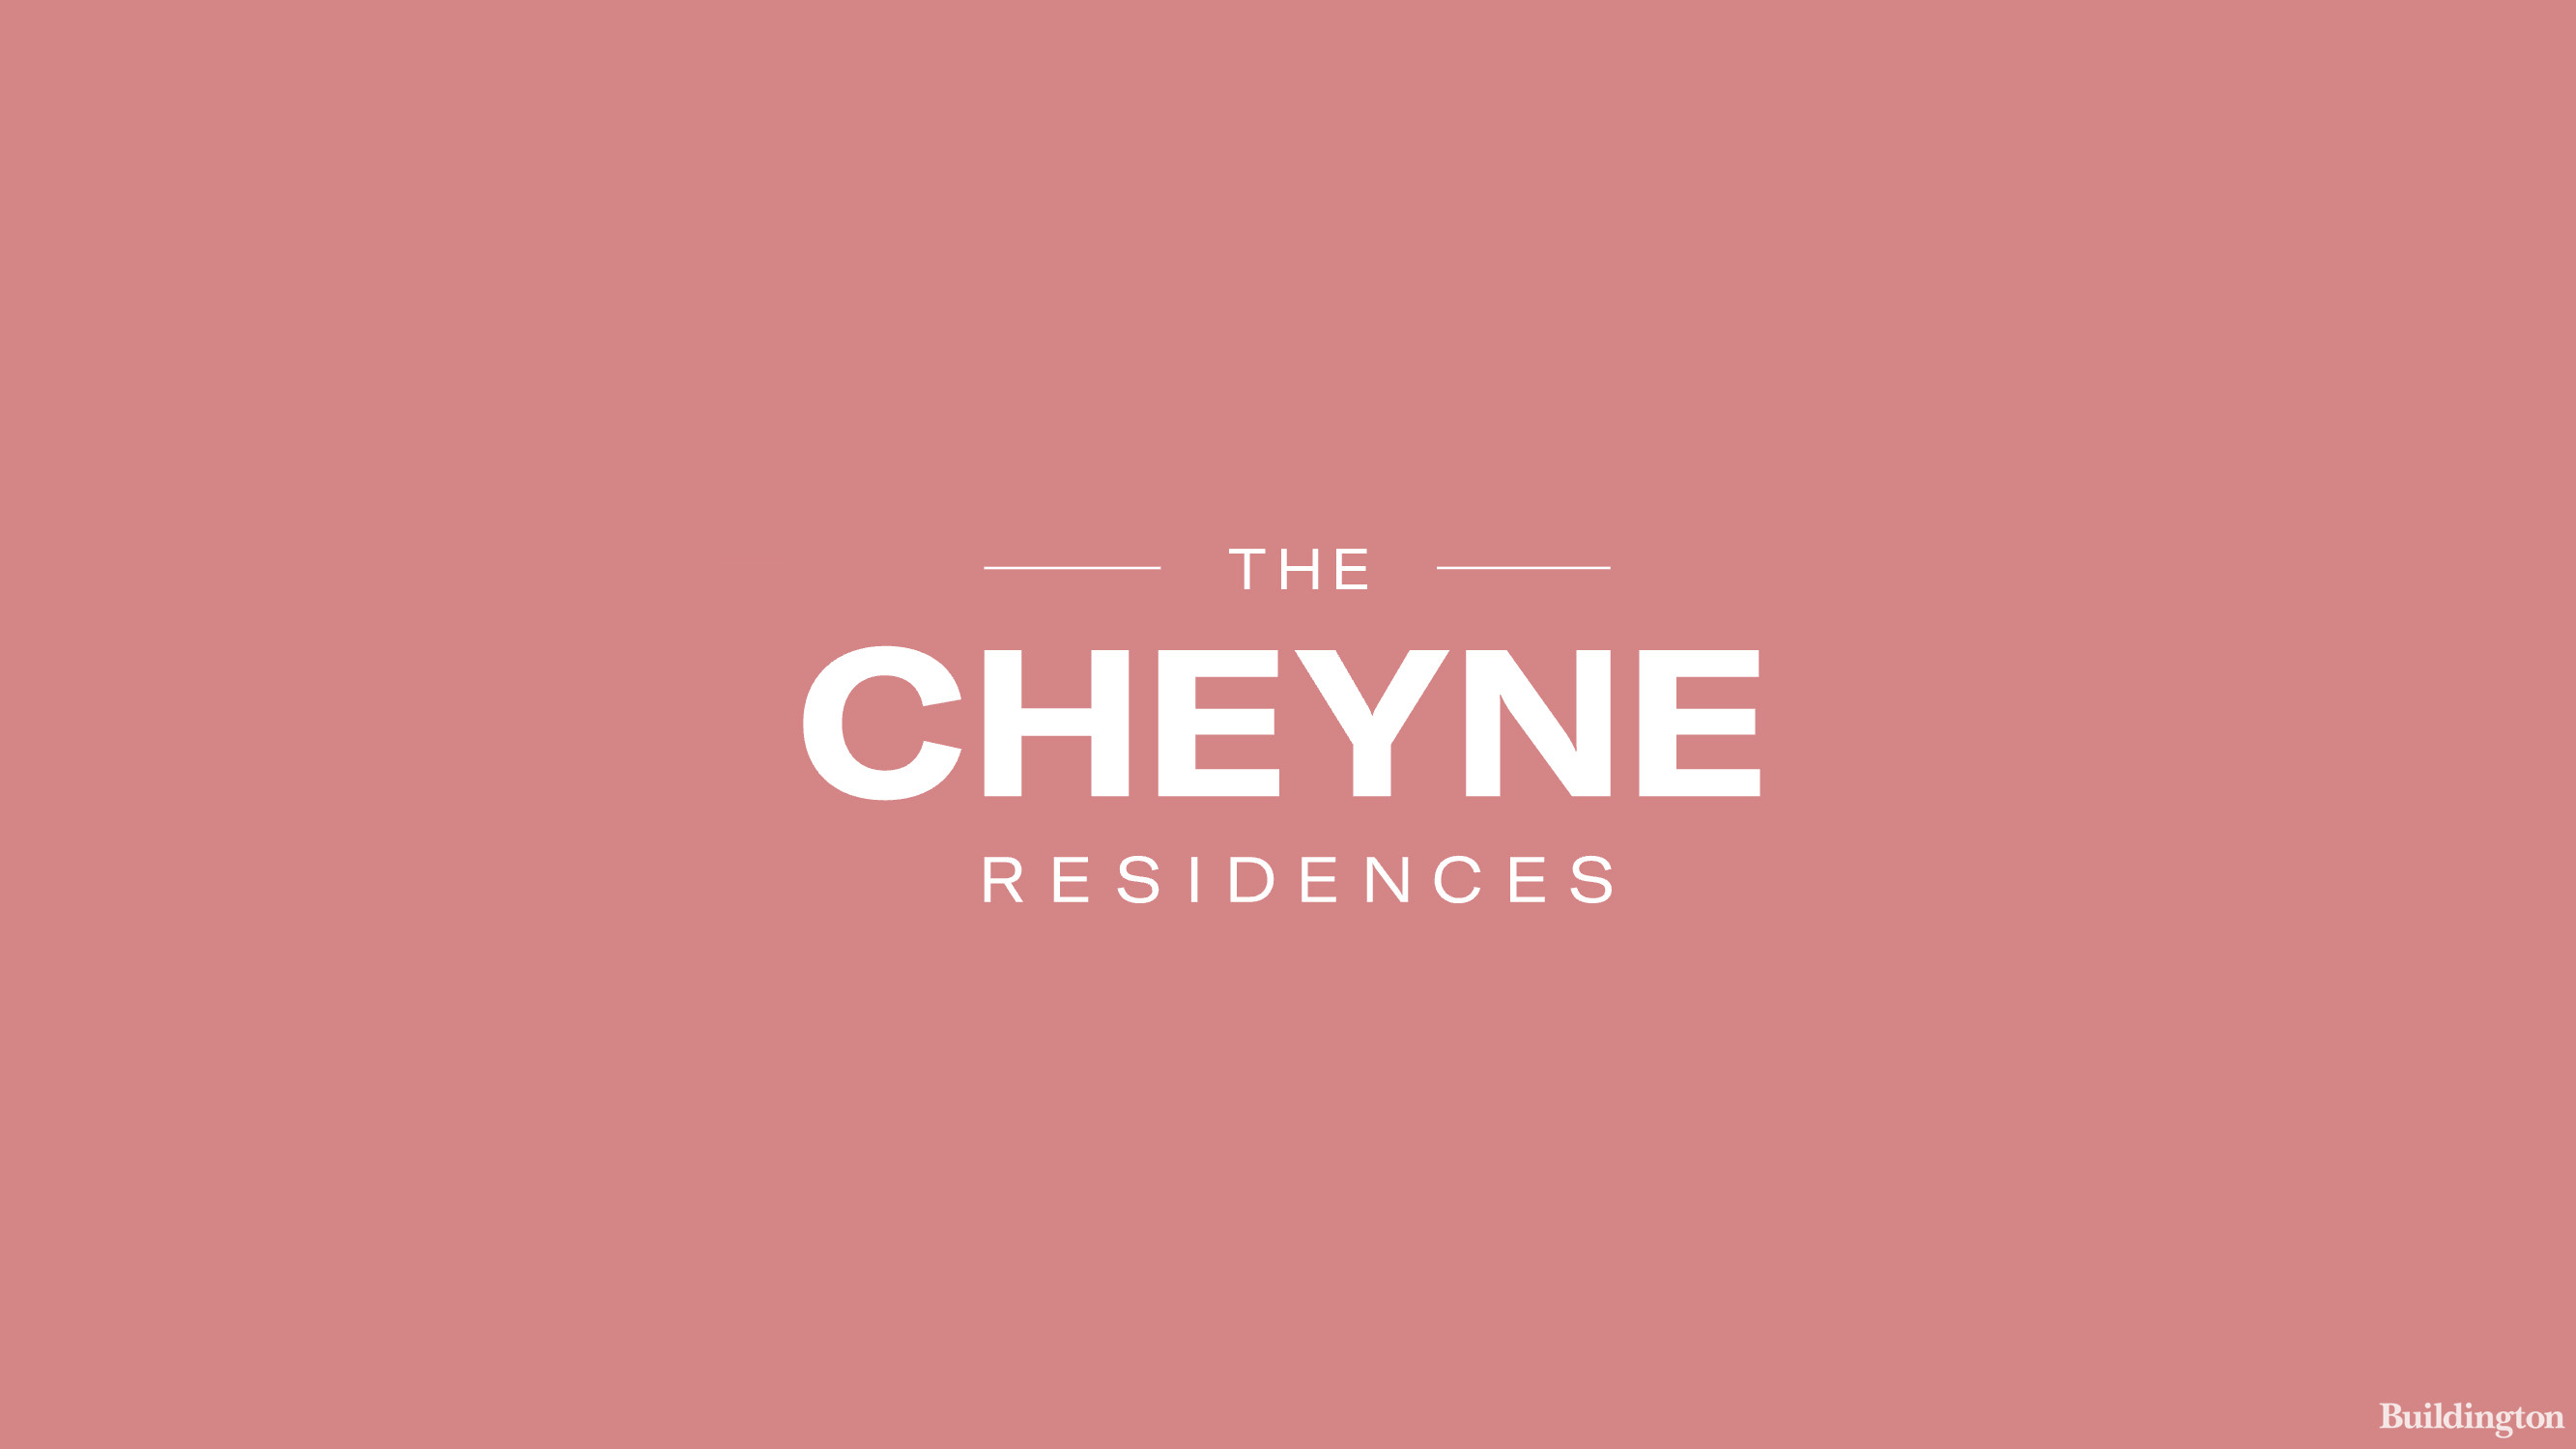 The Cheyne Residences development cover image